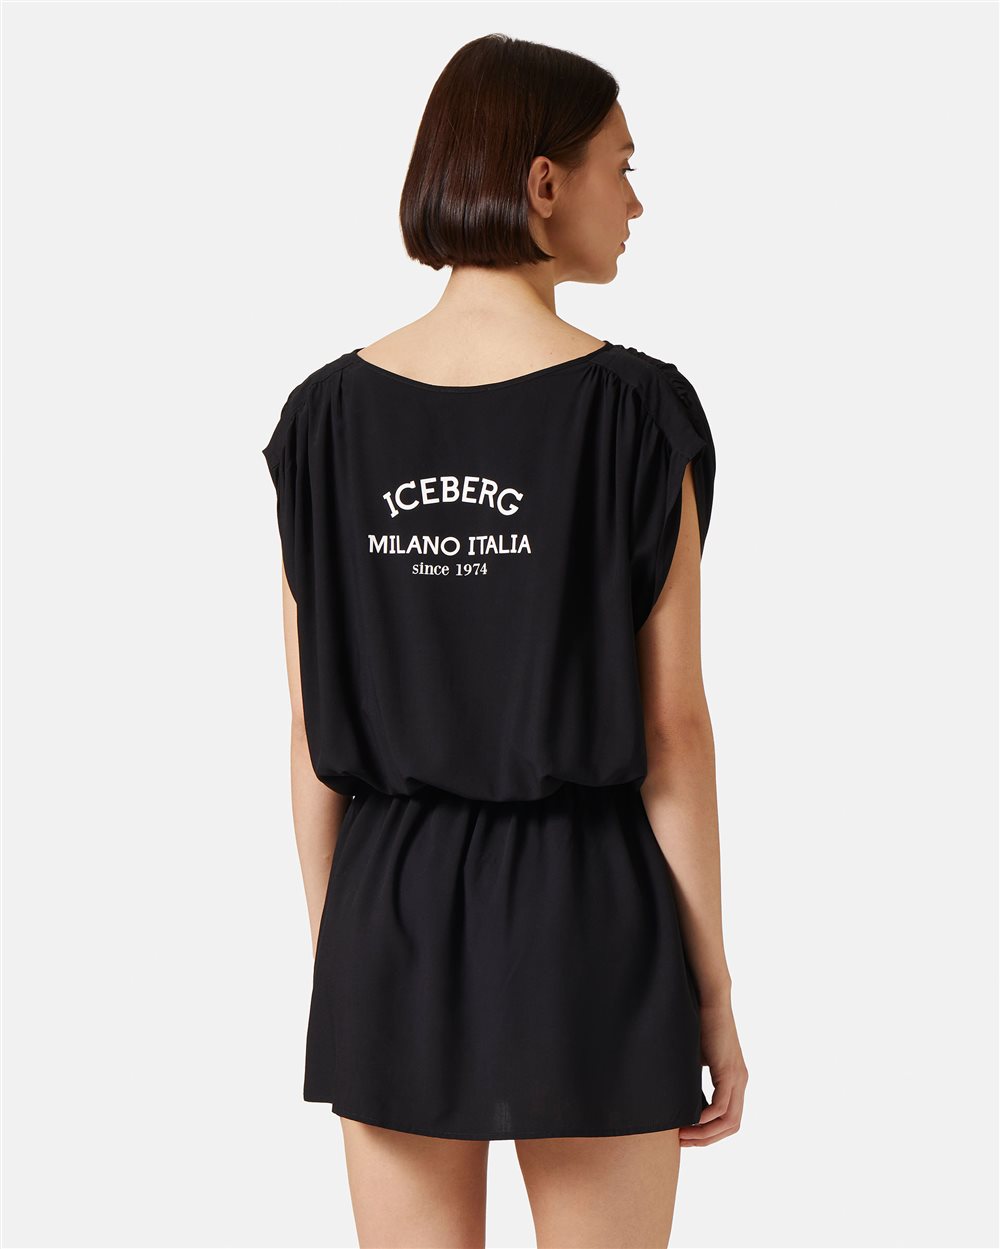 Black dress with logo - Iceberg - Official Website